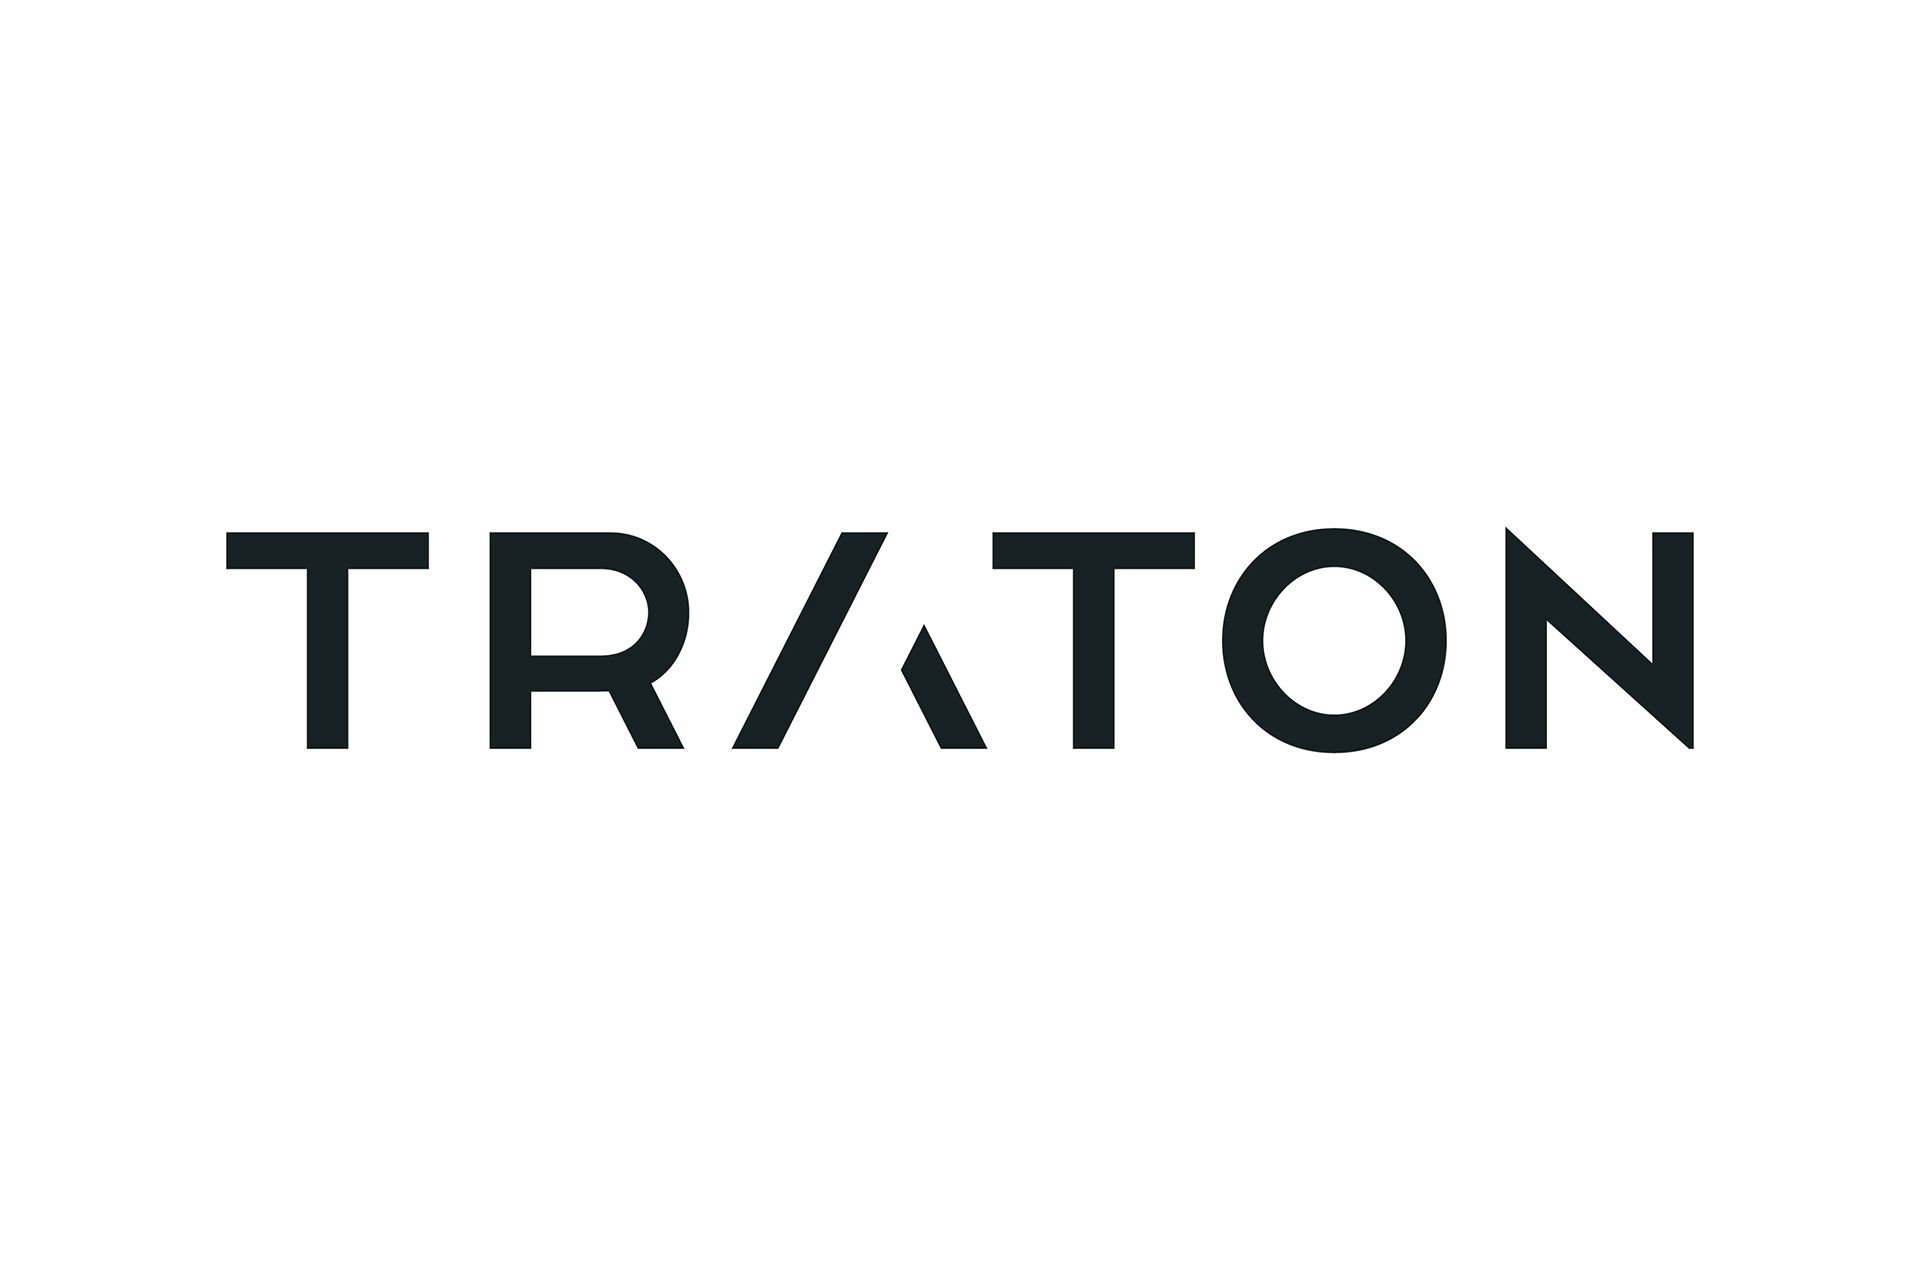 TRATON Logo dunkelblau in RGB
                 